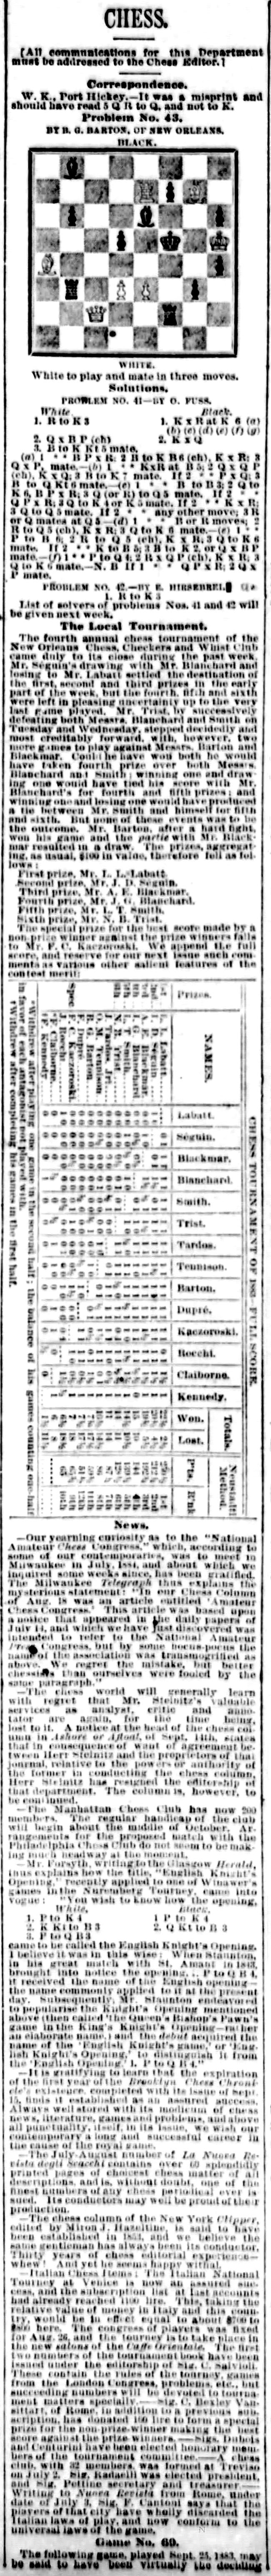 1883.09.30-01 New Orleans Times-Democrat.jpg